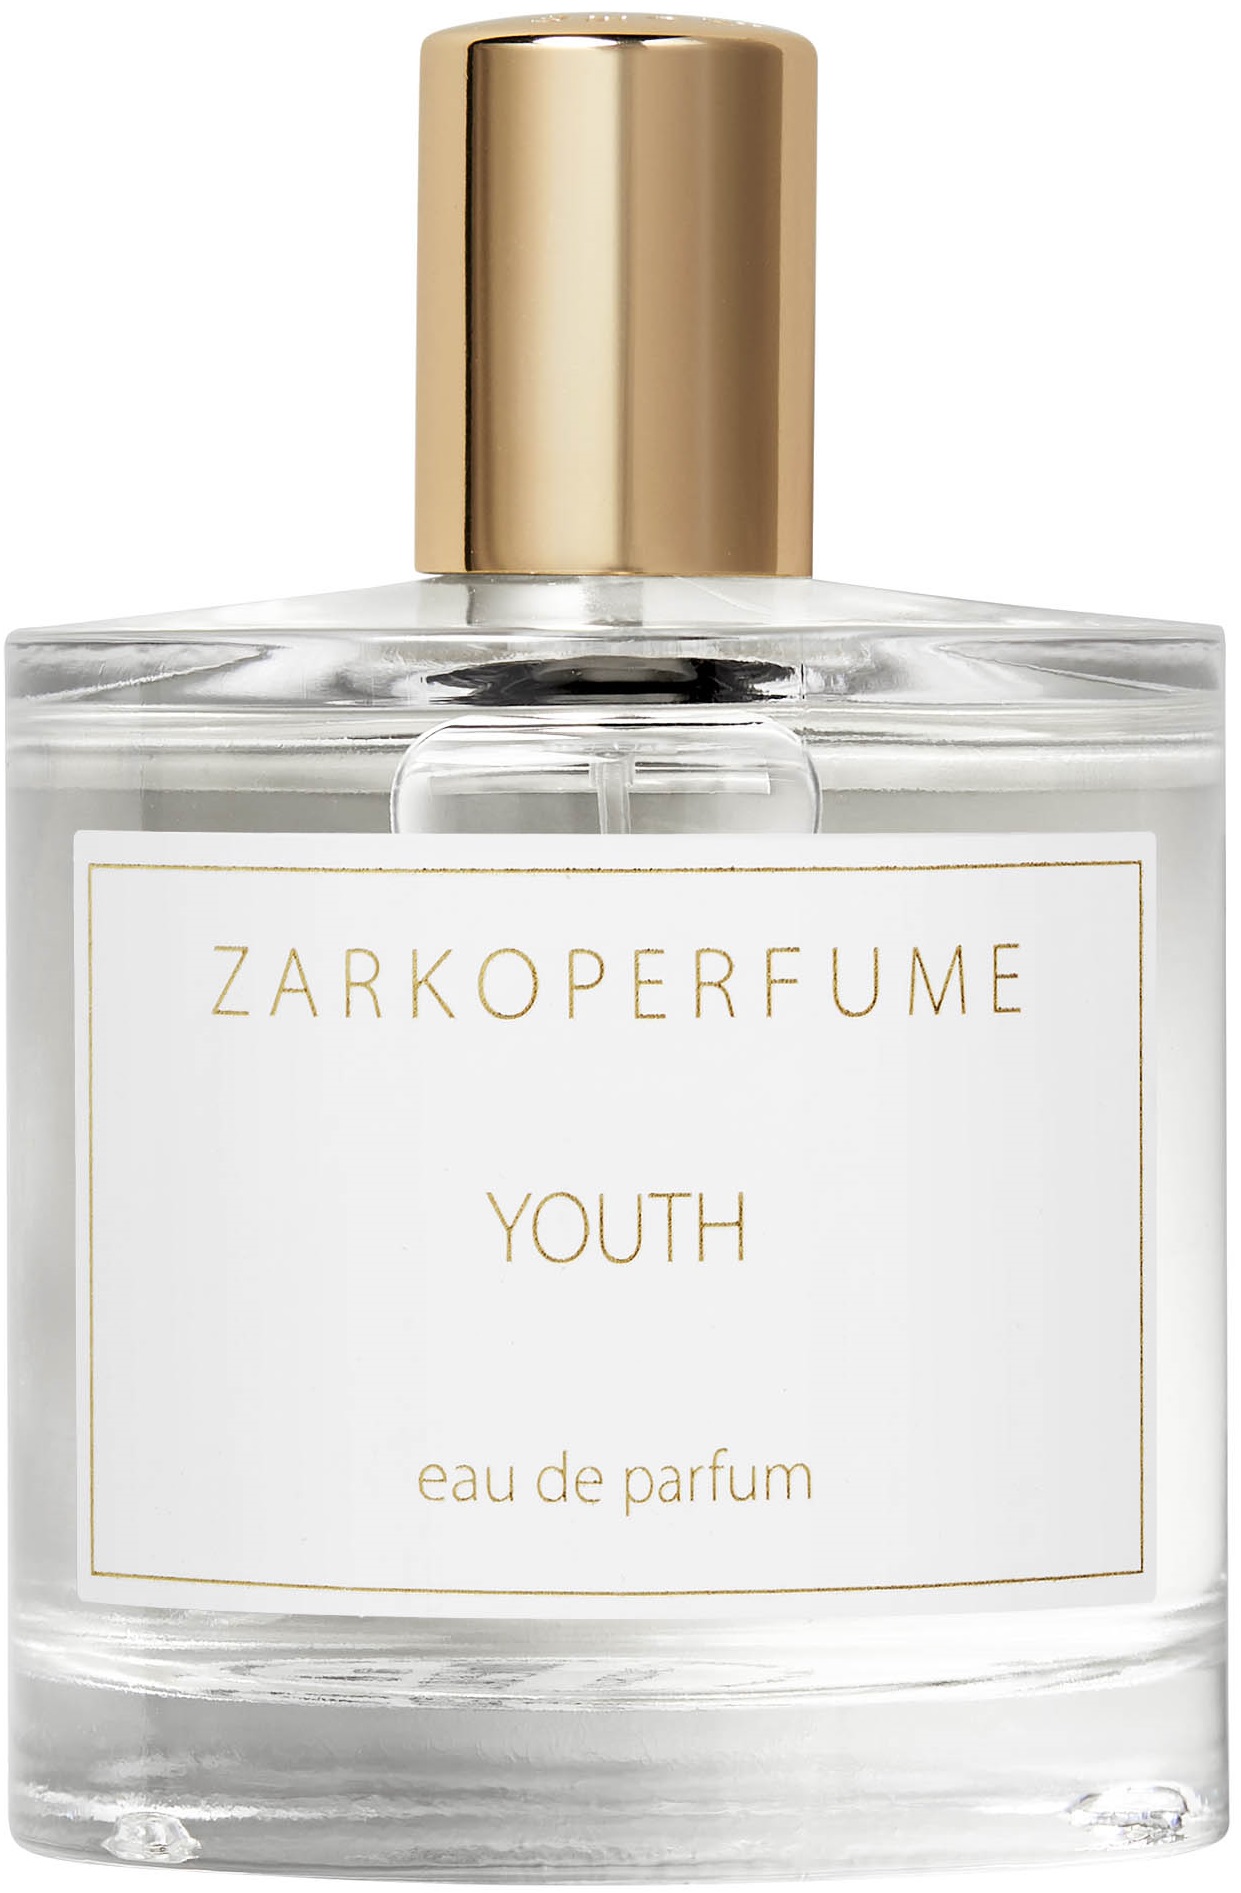 zarkoperfume youth woda perfumowana 100 ml   